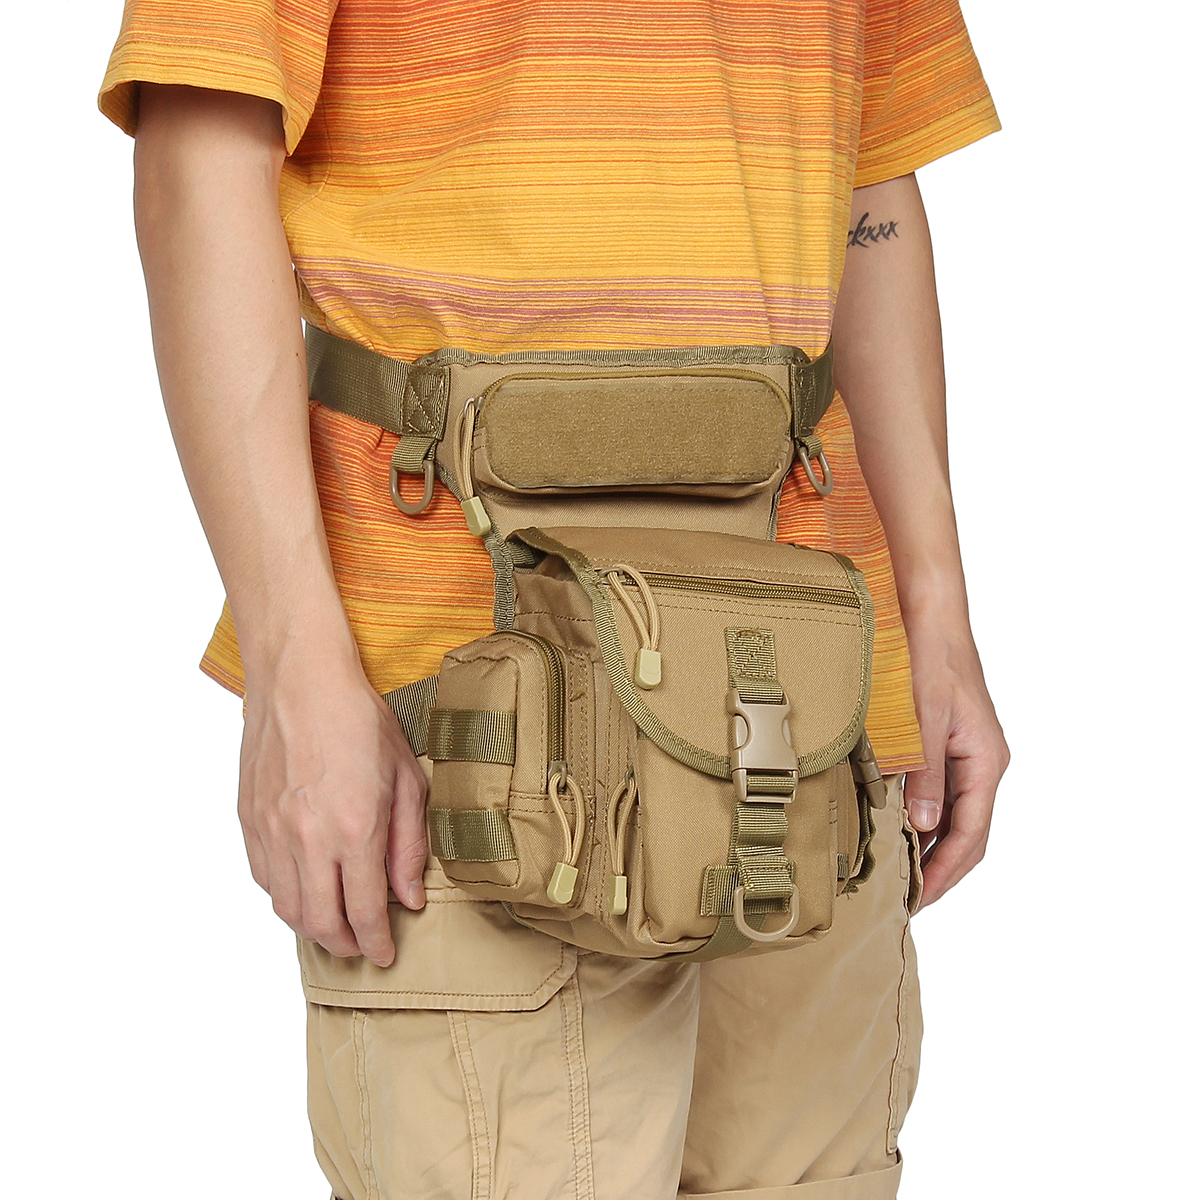 Nylon-Tactical-Waist-Bag-Military-Belt-Buckle-Pouches-Storage-Bag-Leg-Bag-Outdoor-Hunting-Climbing-1763612-8